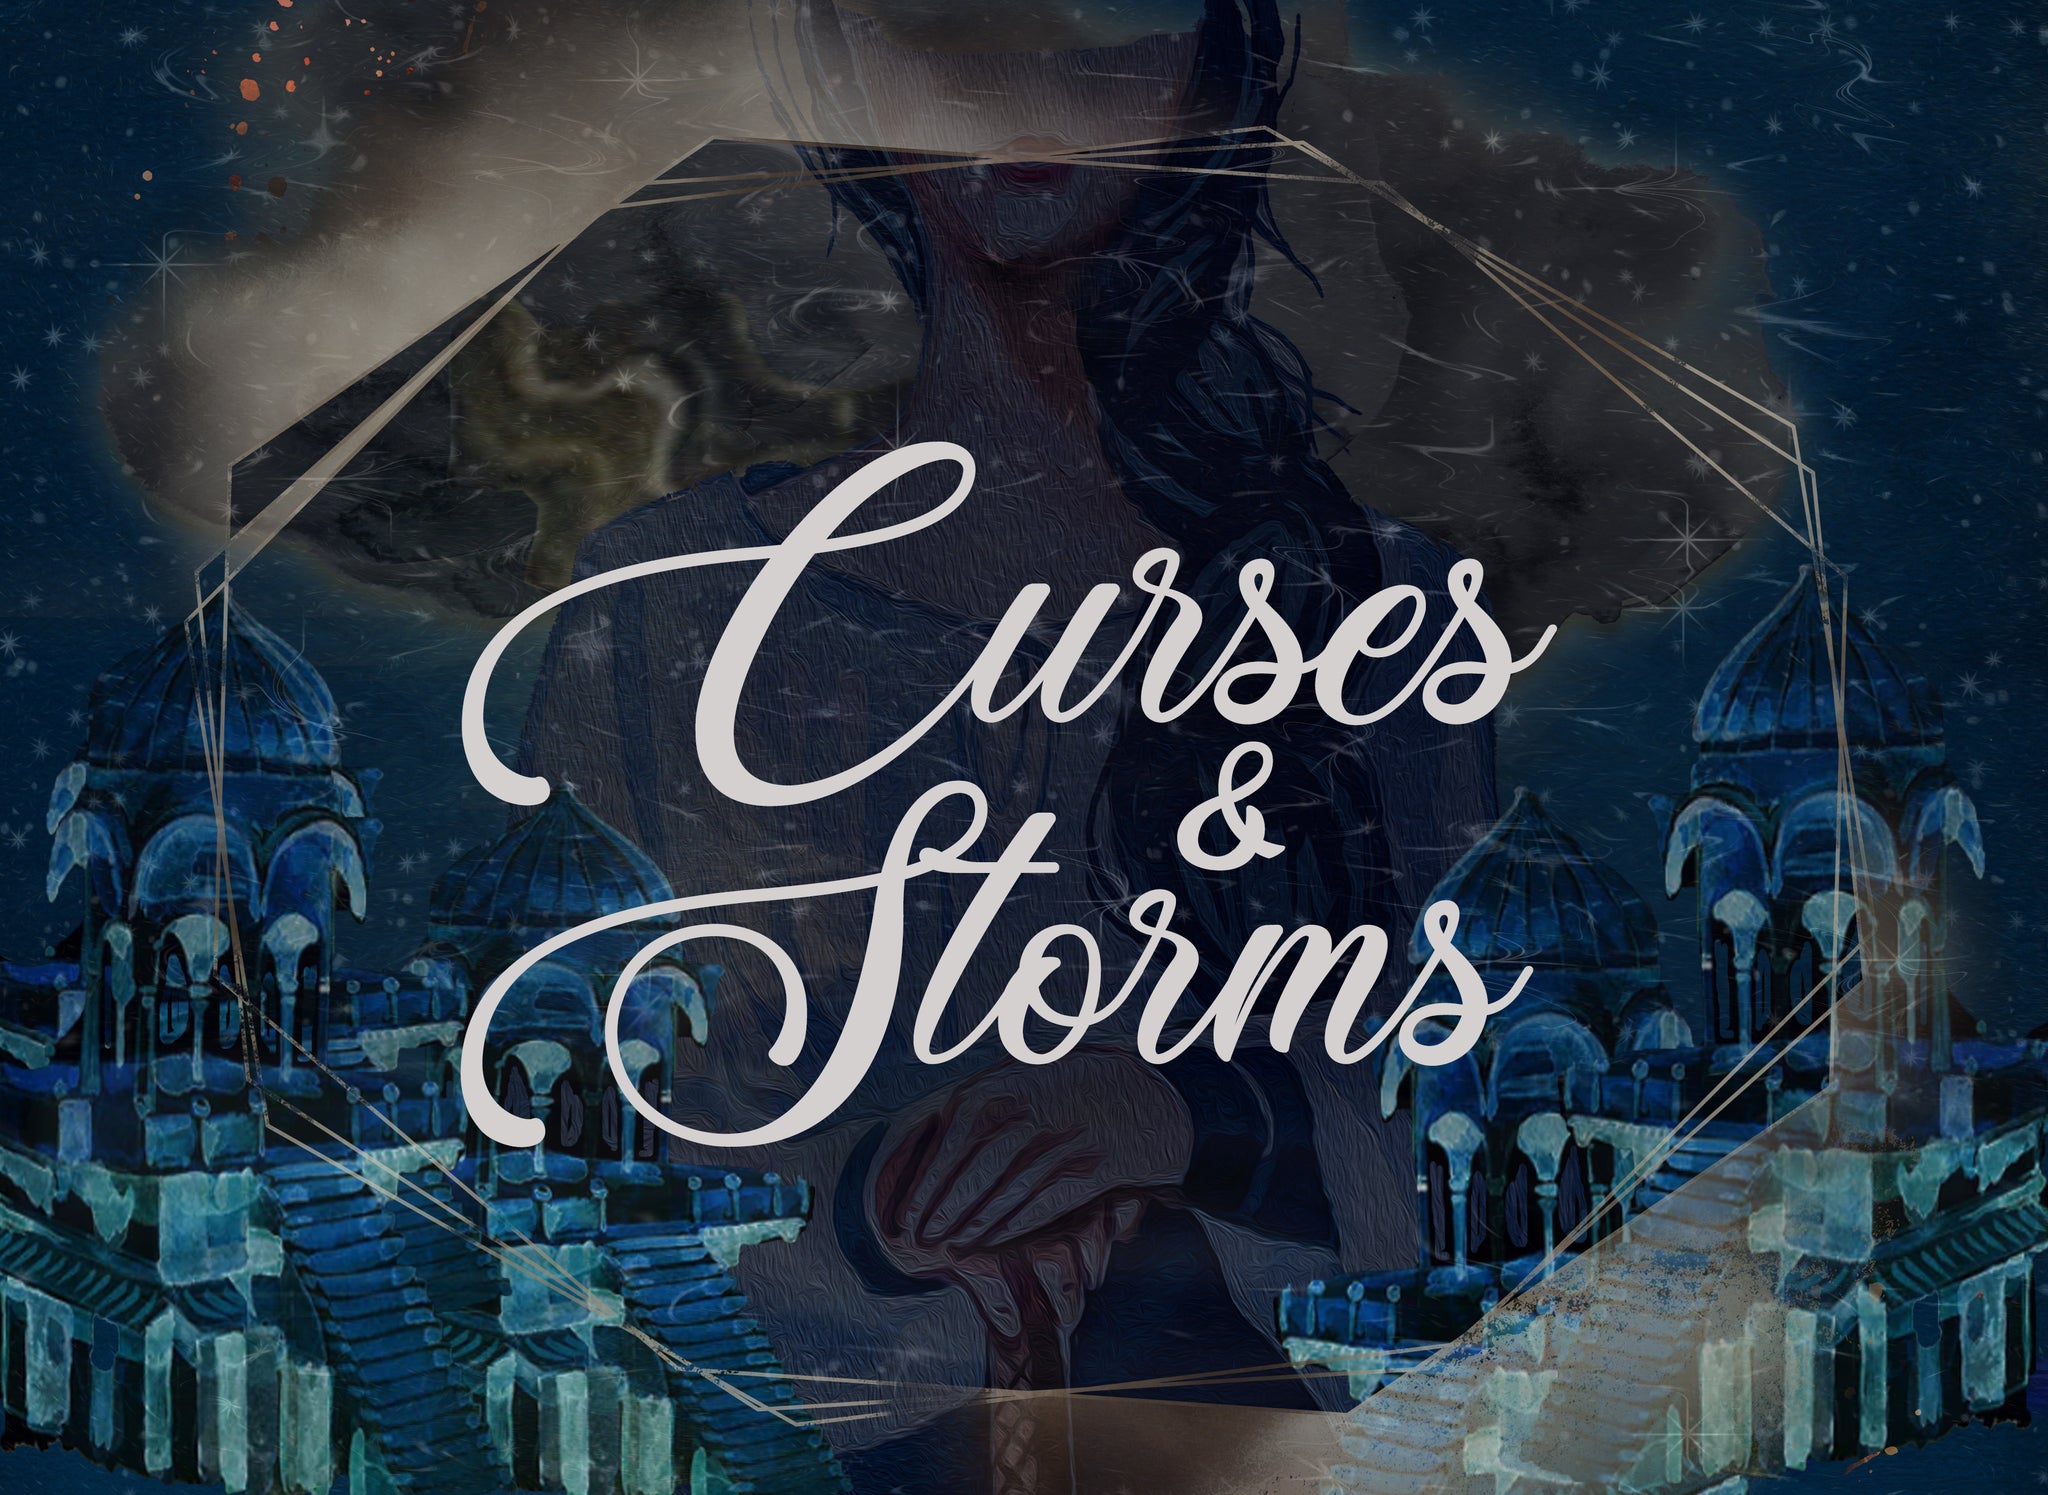 The Darkening by Sunya Mara (Curses & Storms - July 2022 box